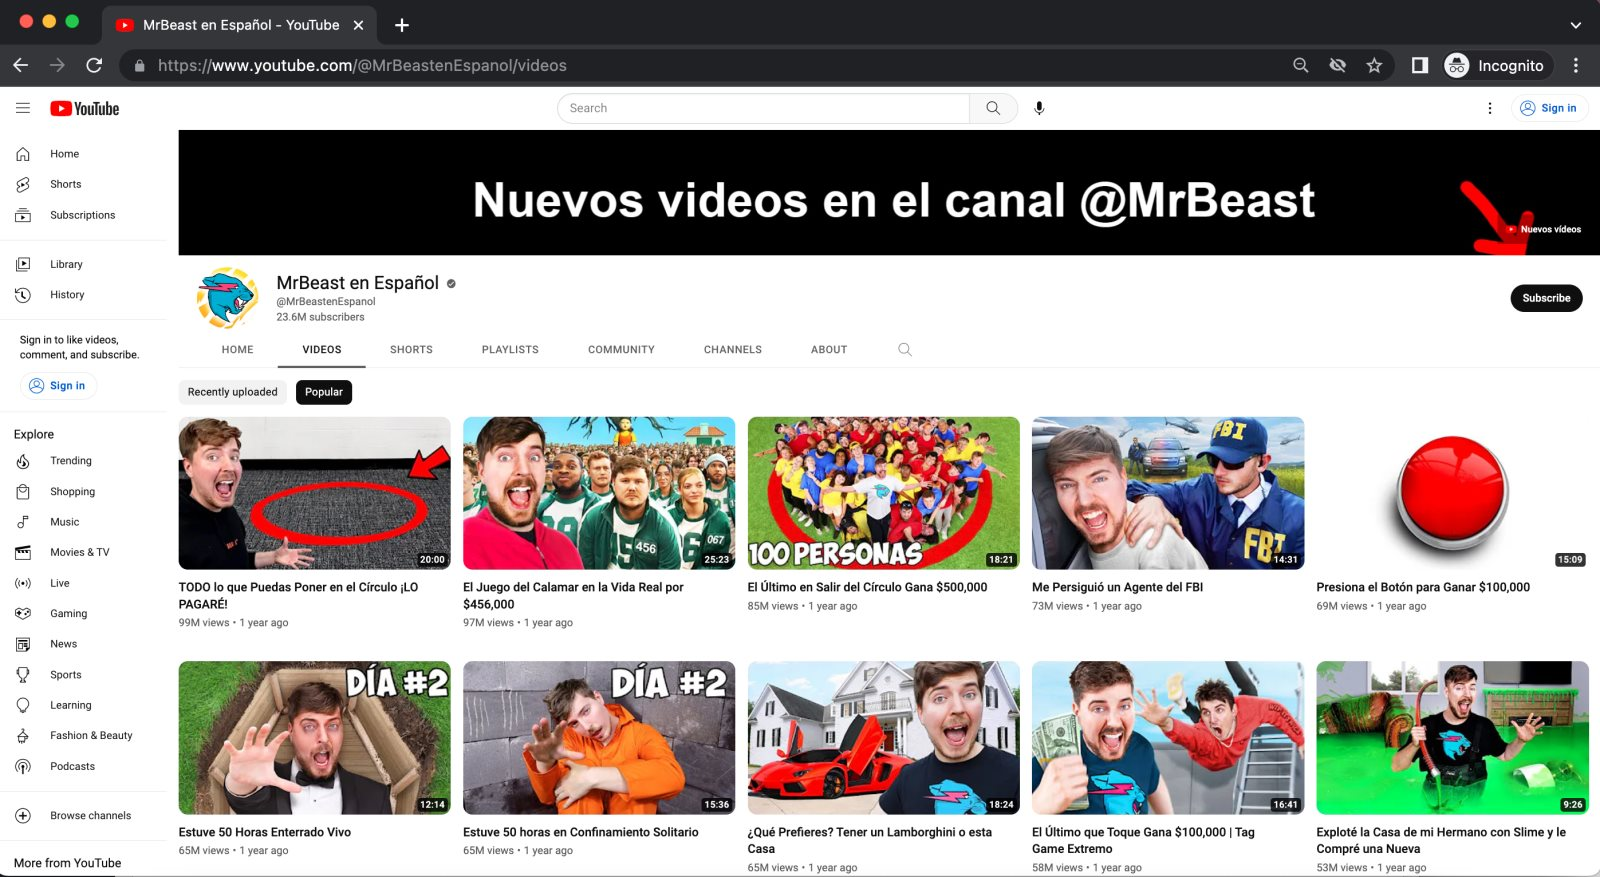 mrbeast-espanol-most-popular-videos-1600x877.png